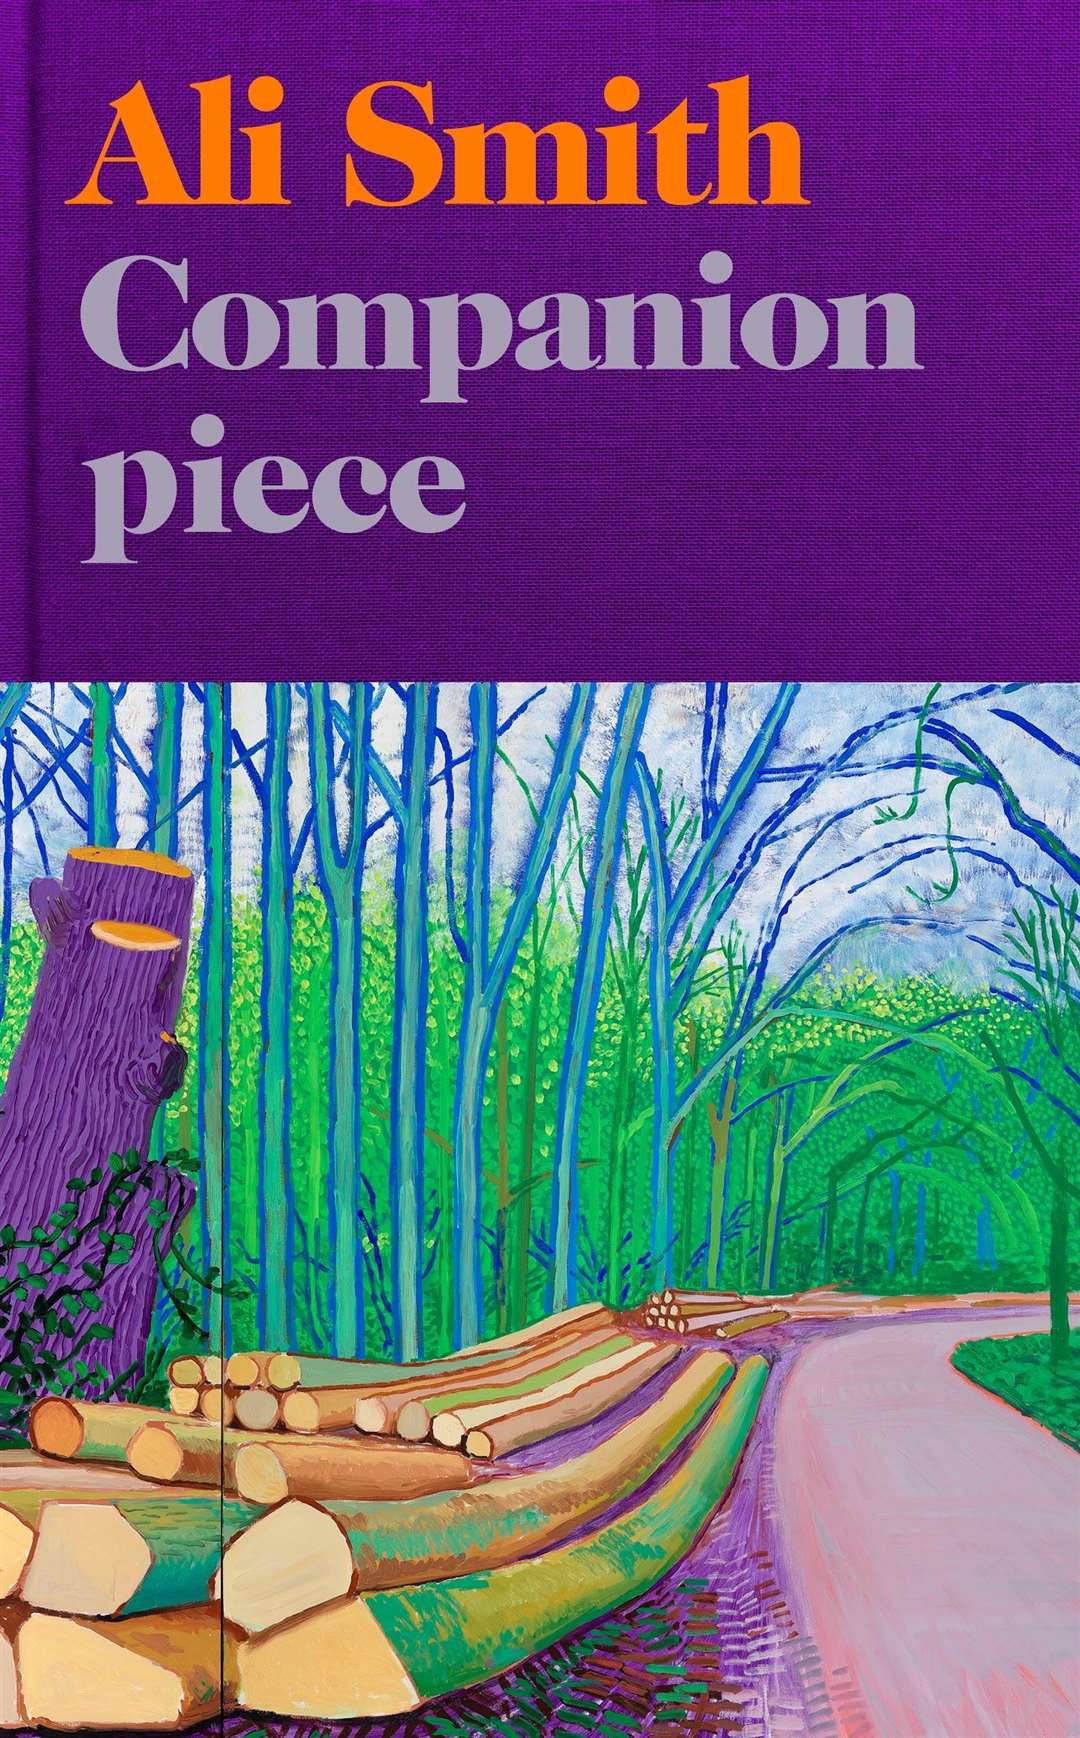 Companion Piece by Ali Smith.